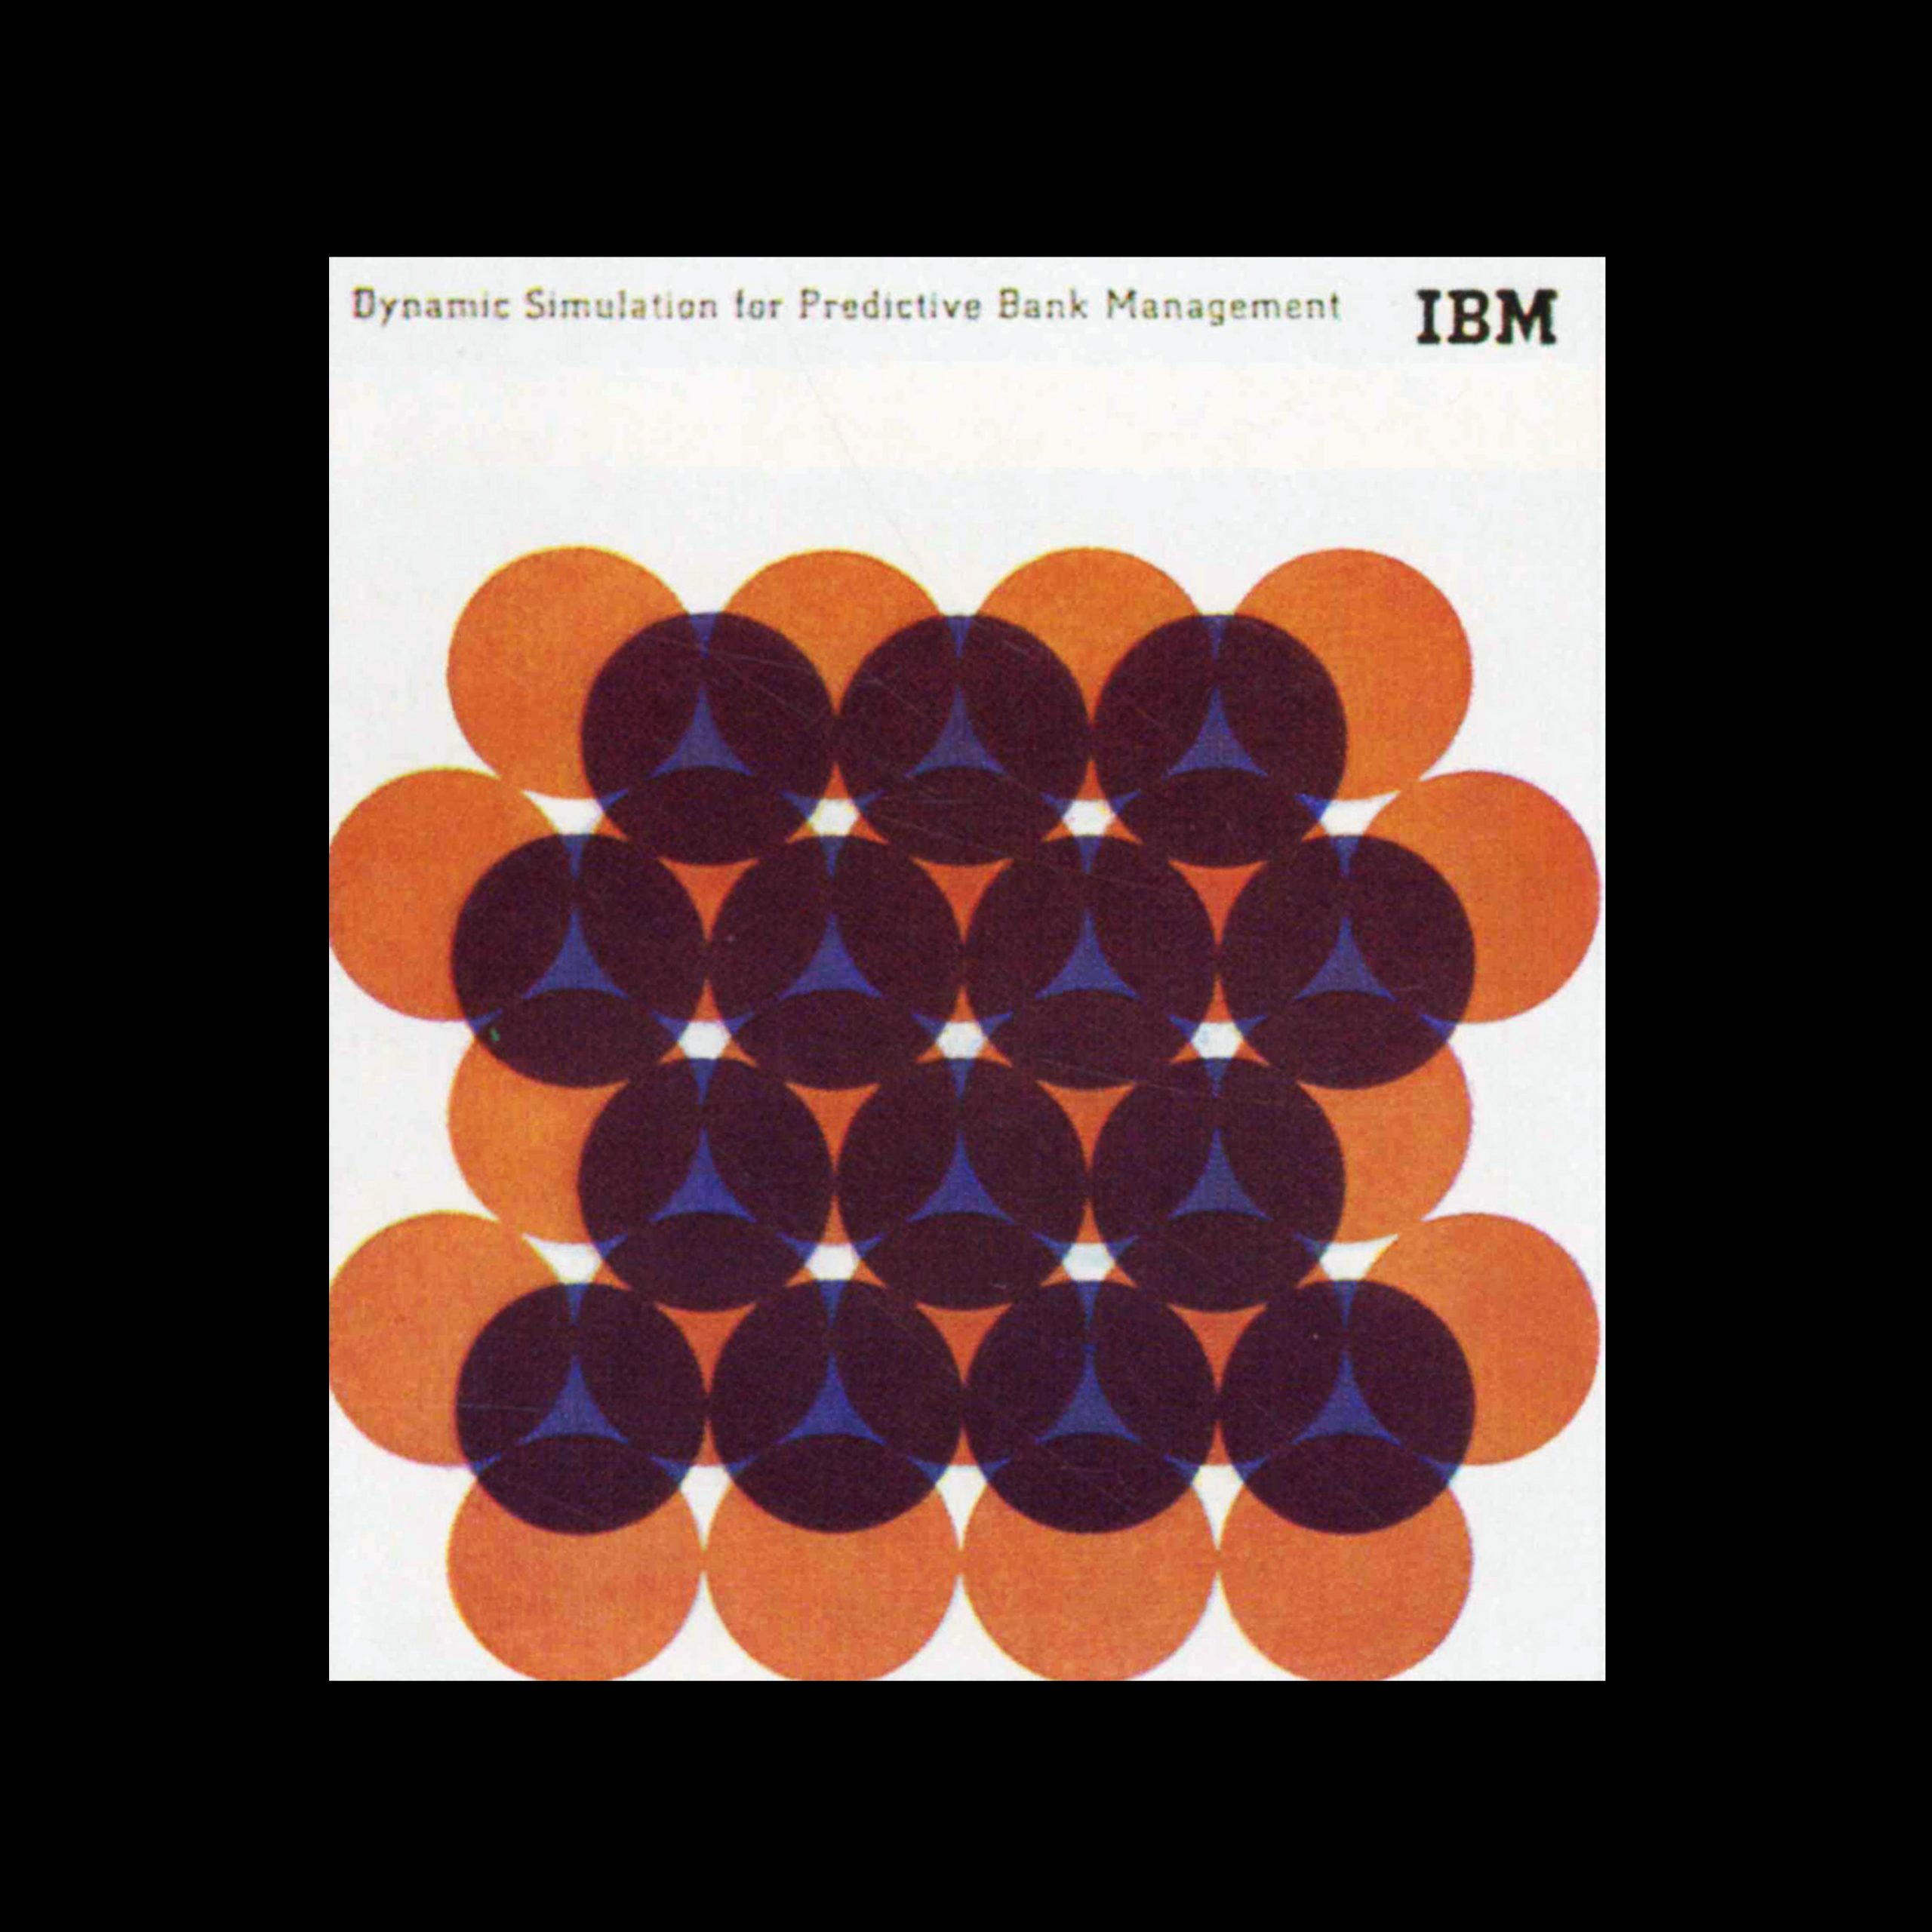 IBM, Equipment Brochure designed by Mary Beresford